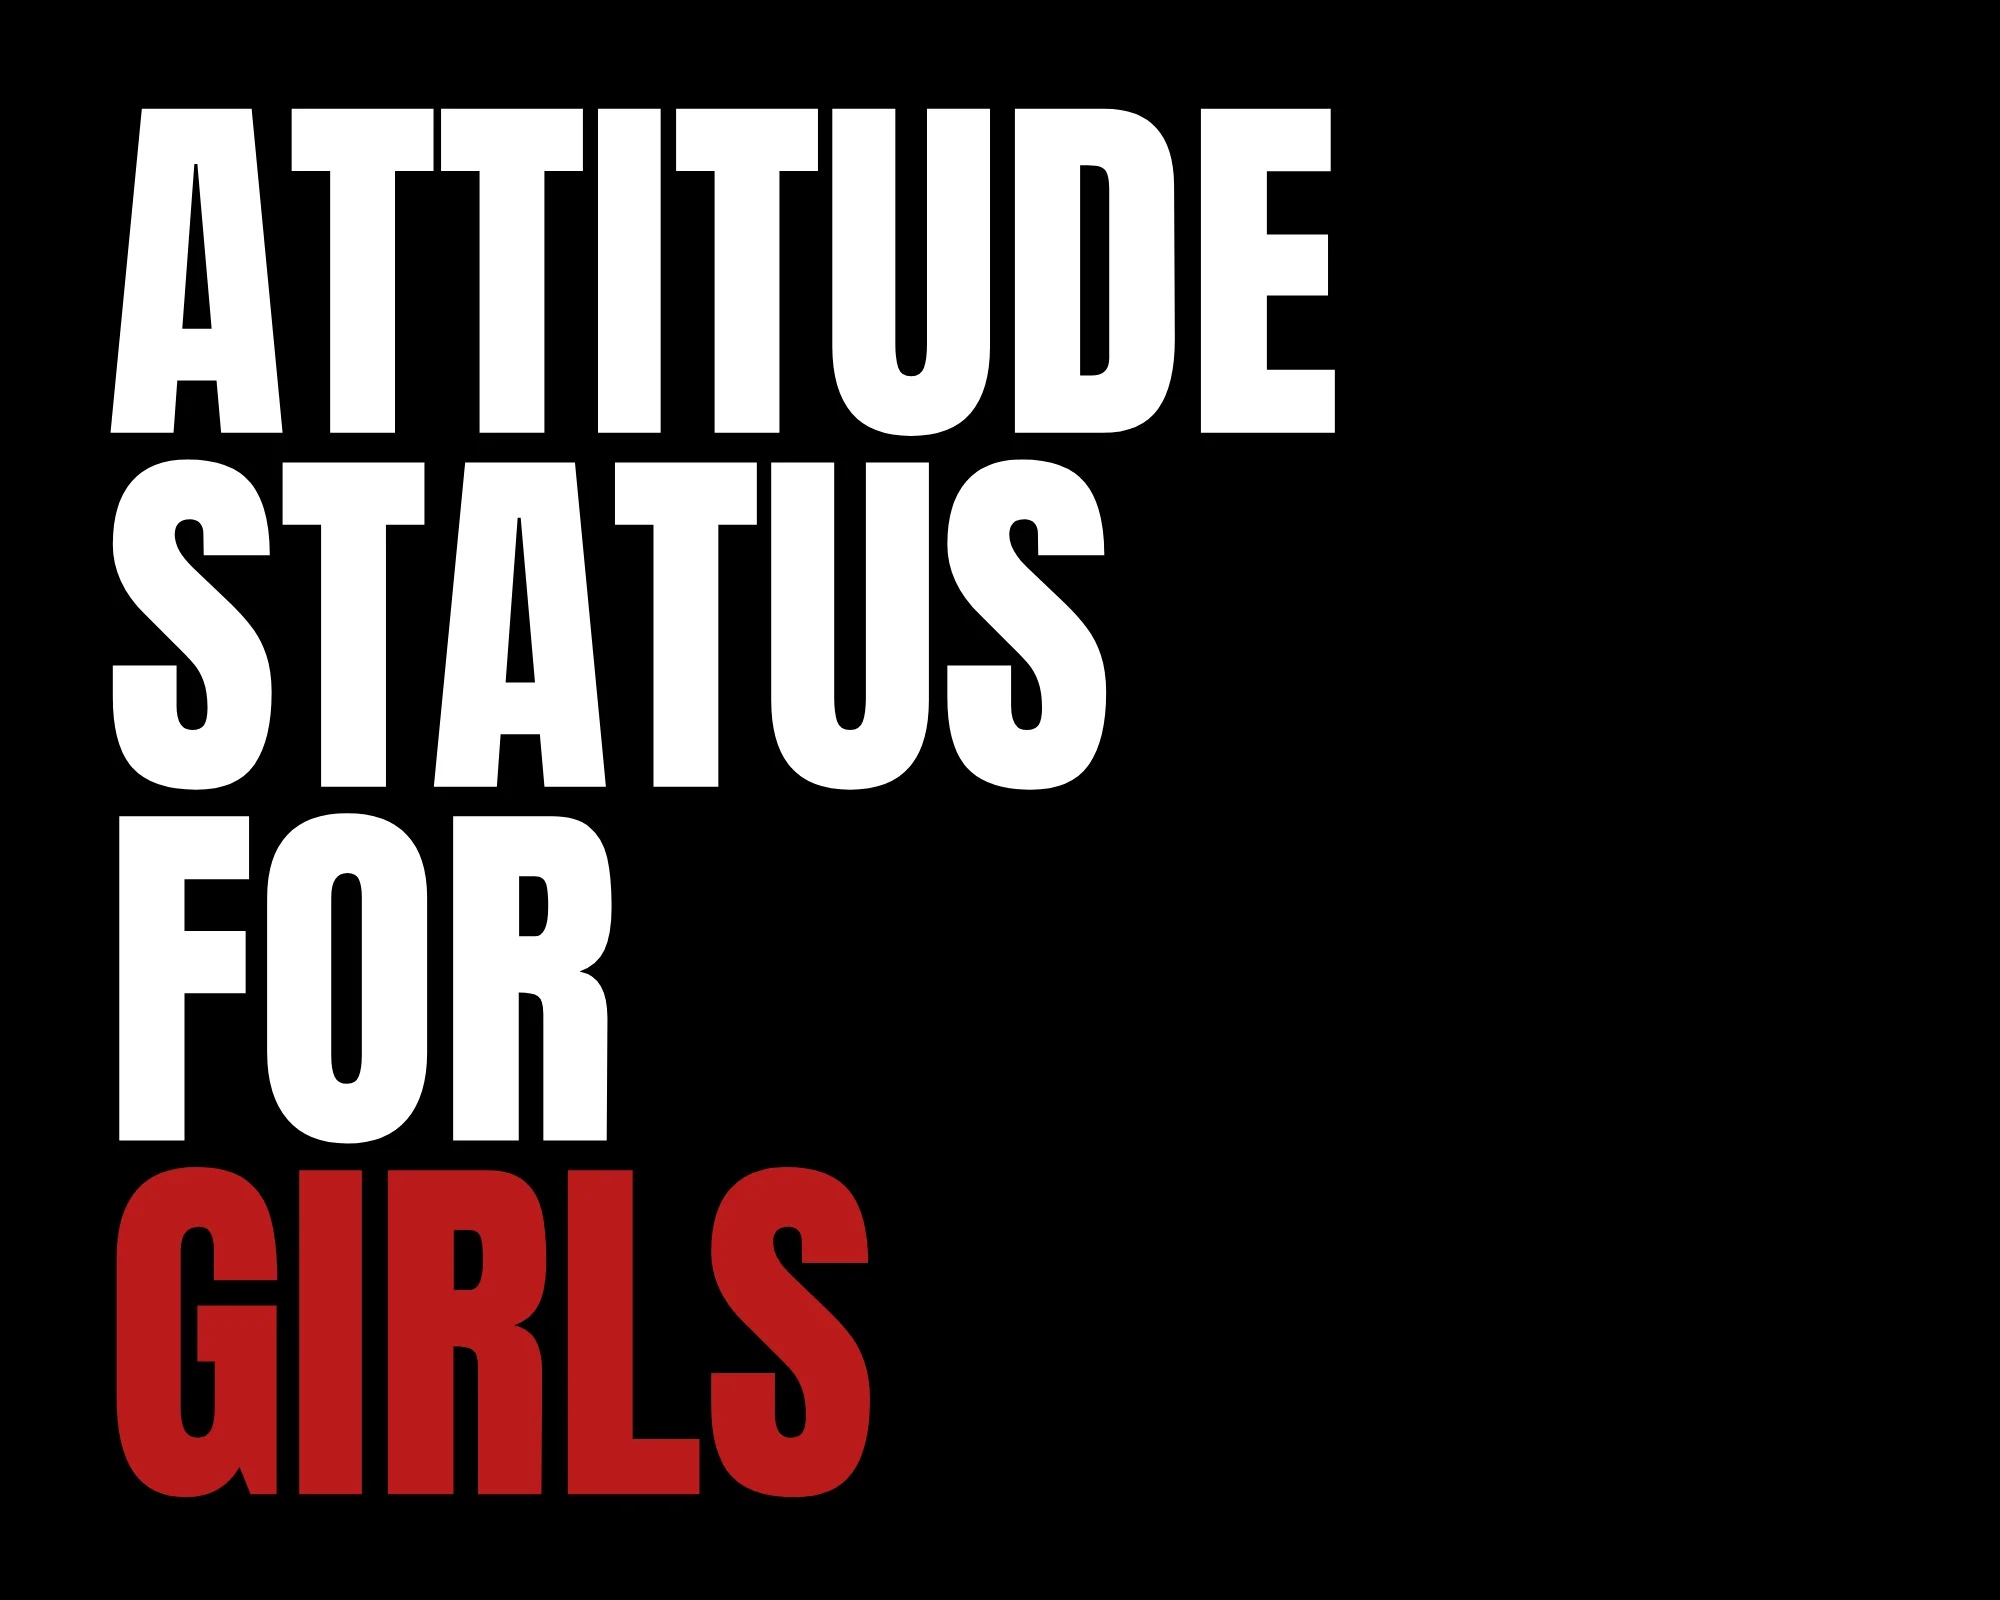 Attitude status for girls